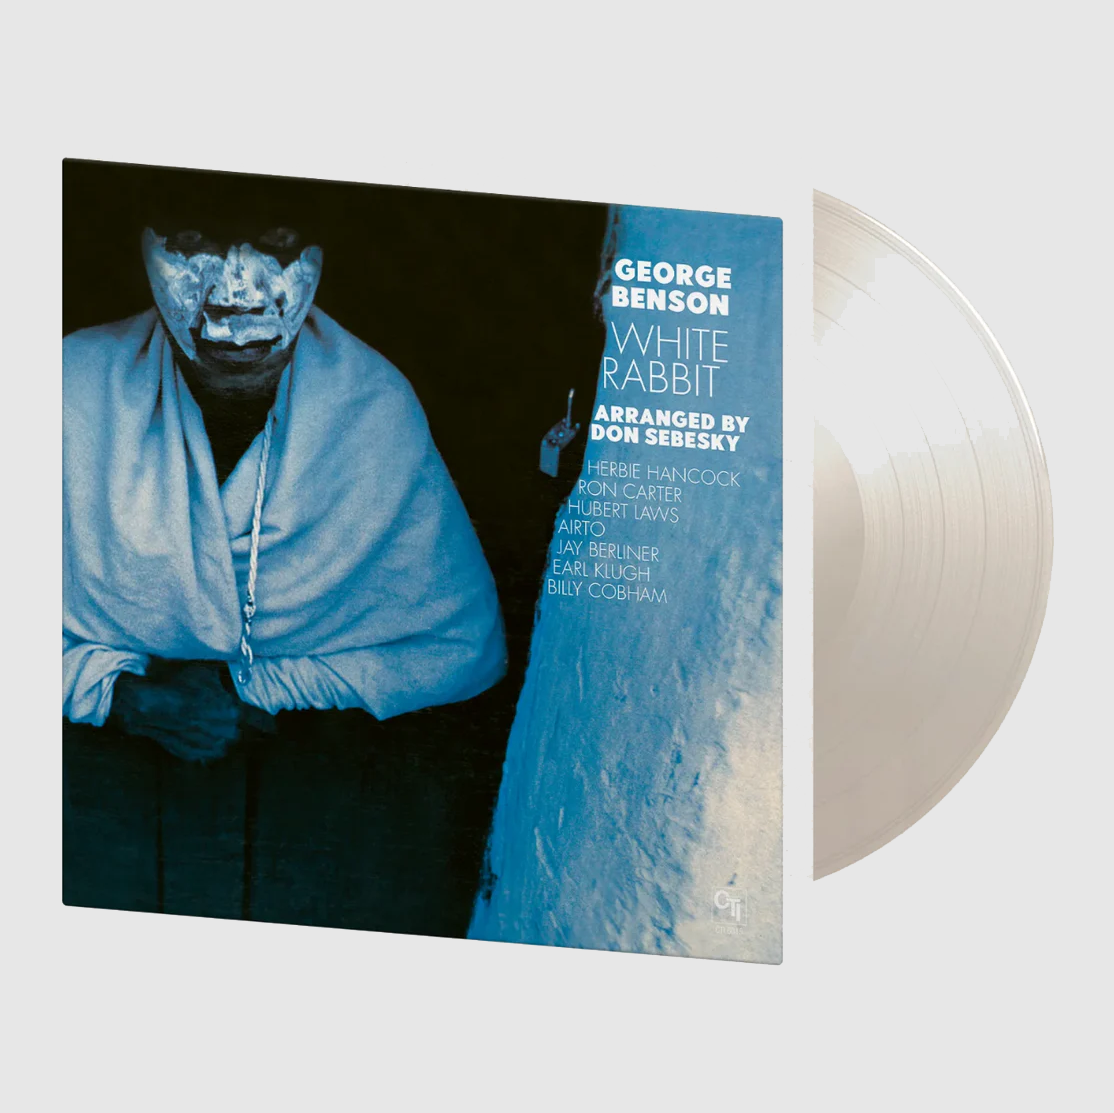 George Benson - White Rabbit: Limited White Vinyl LP